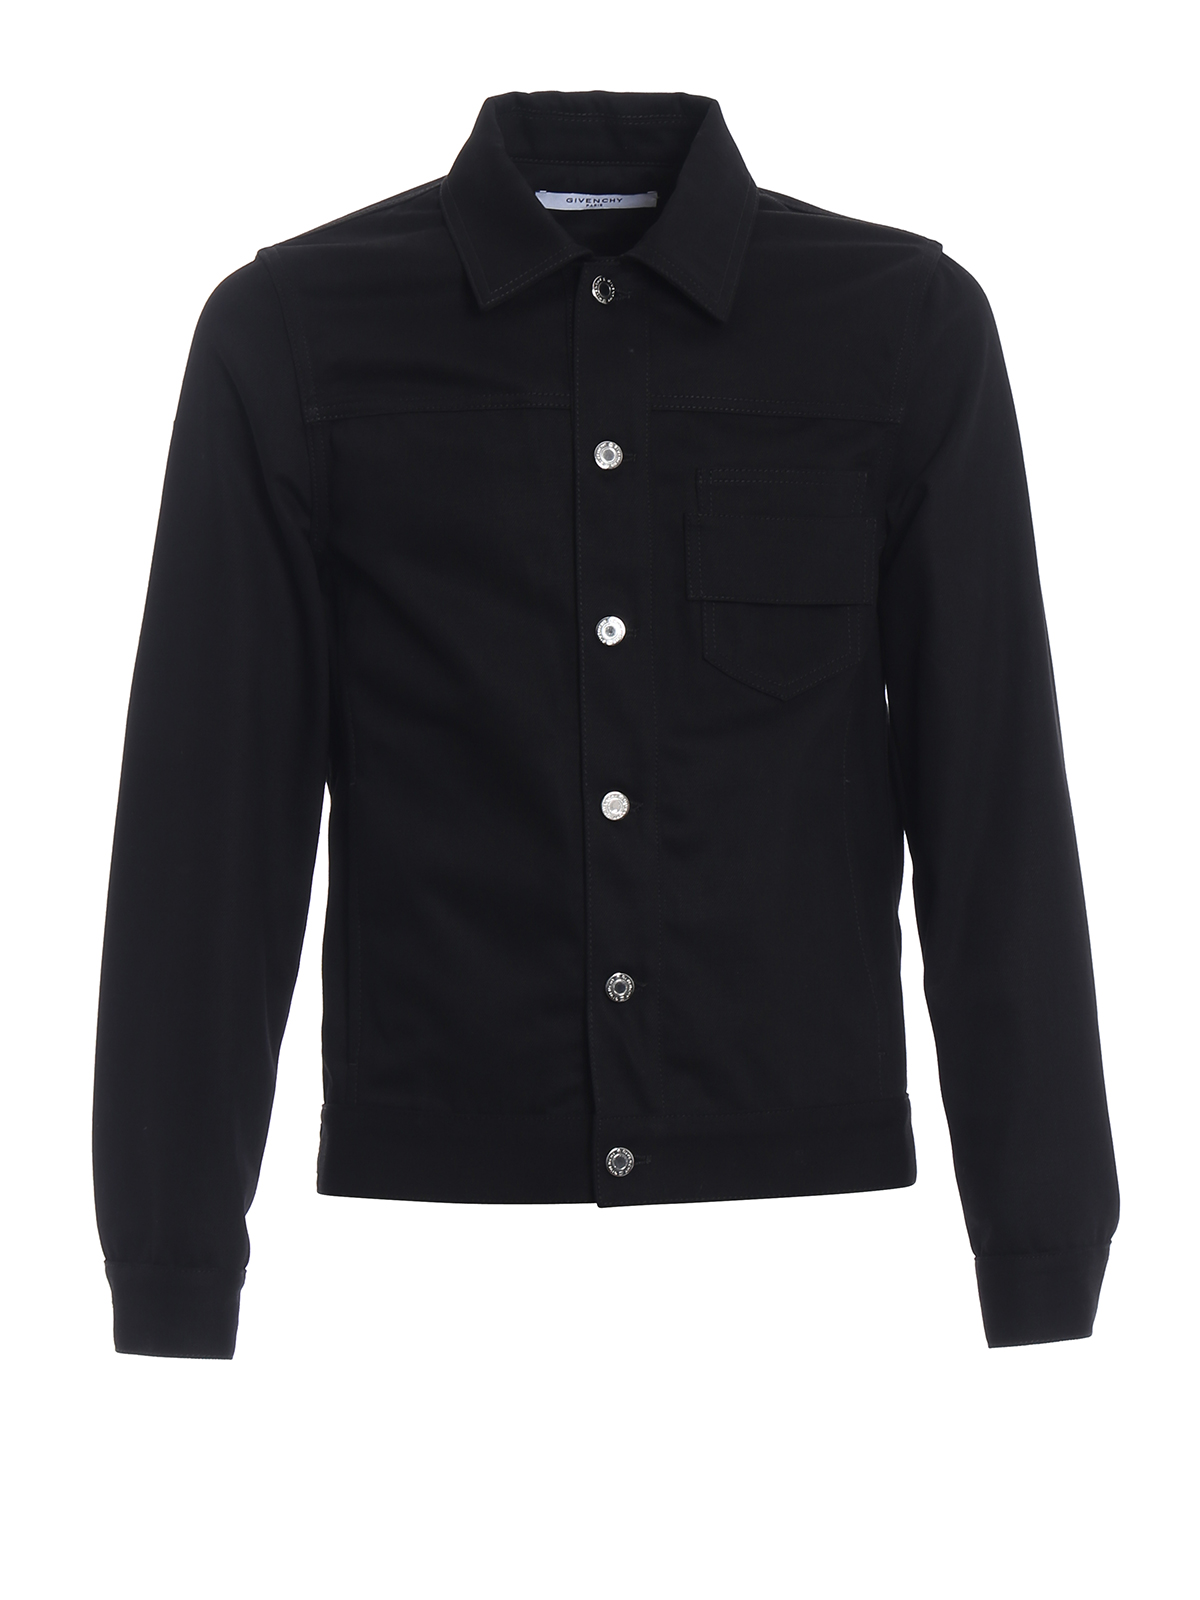 Denim jacket Givenchy - Black cotton denim buttoned jacket - BM00345005001